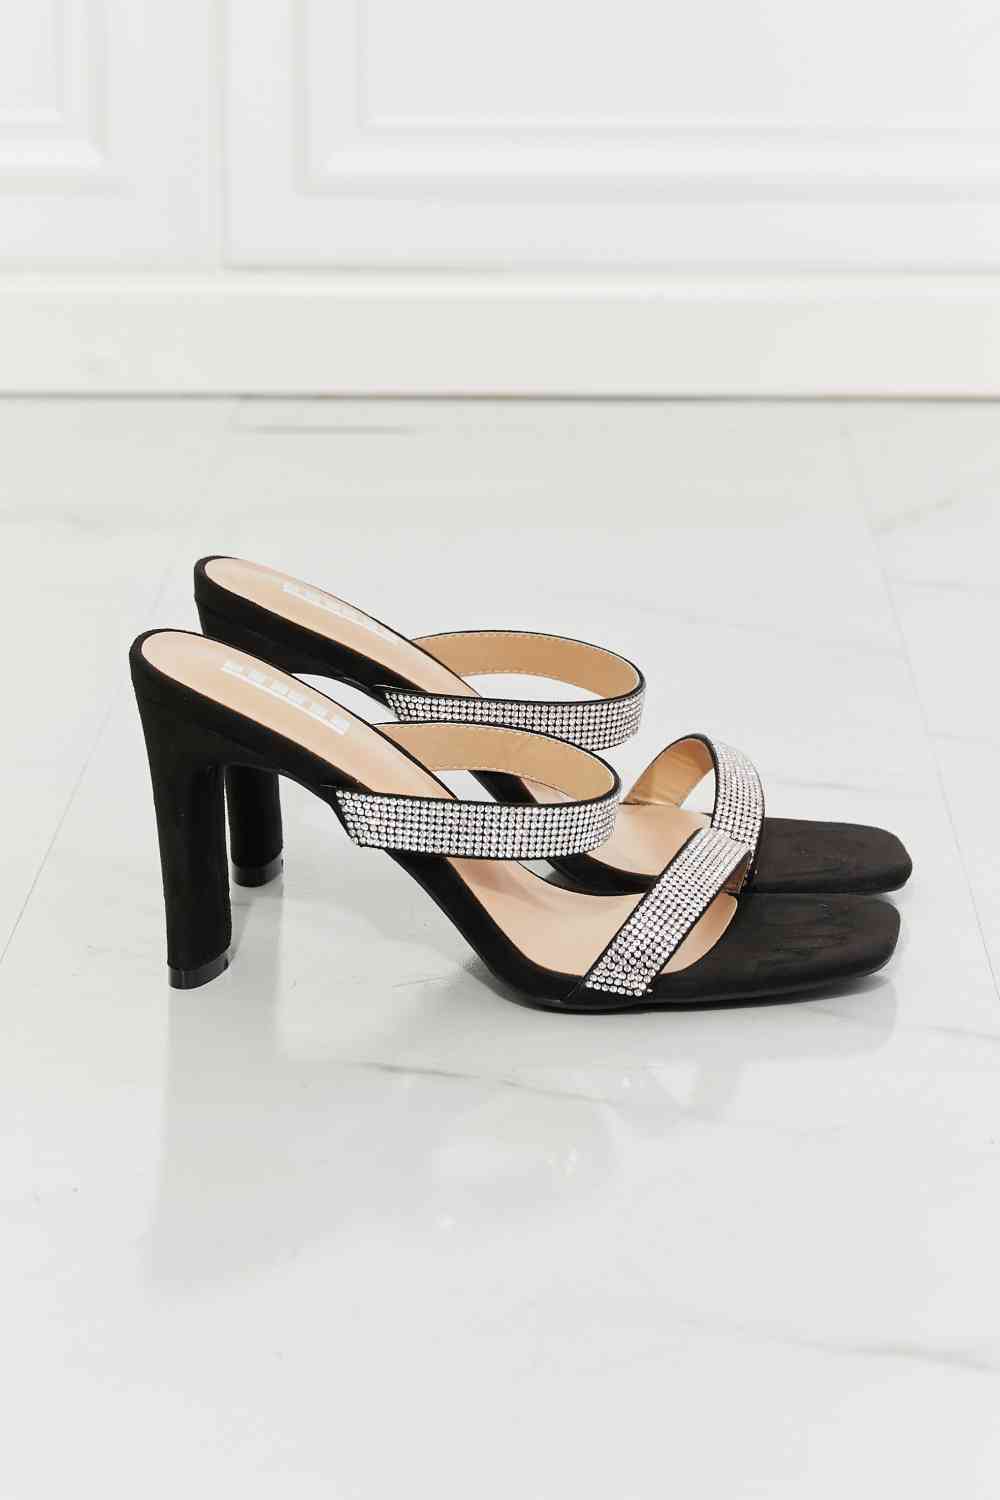 MMShoes Black Sparkle Rhinestone Sandal